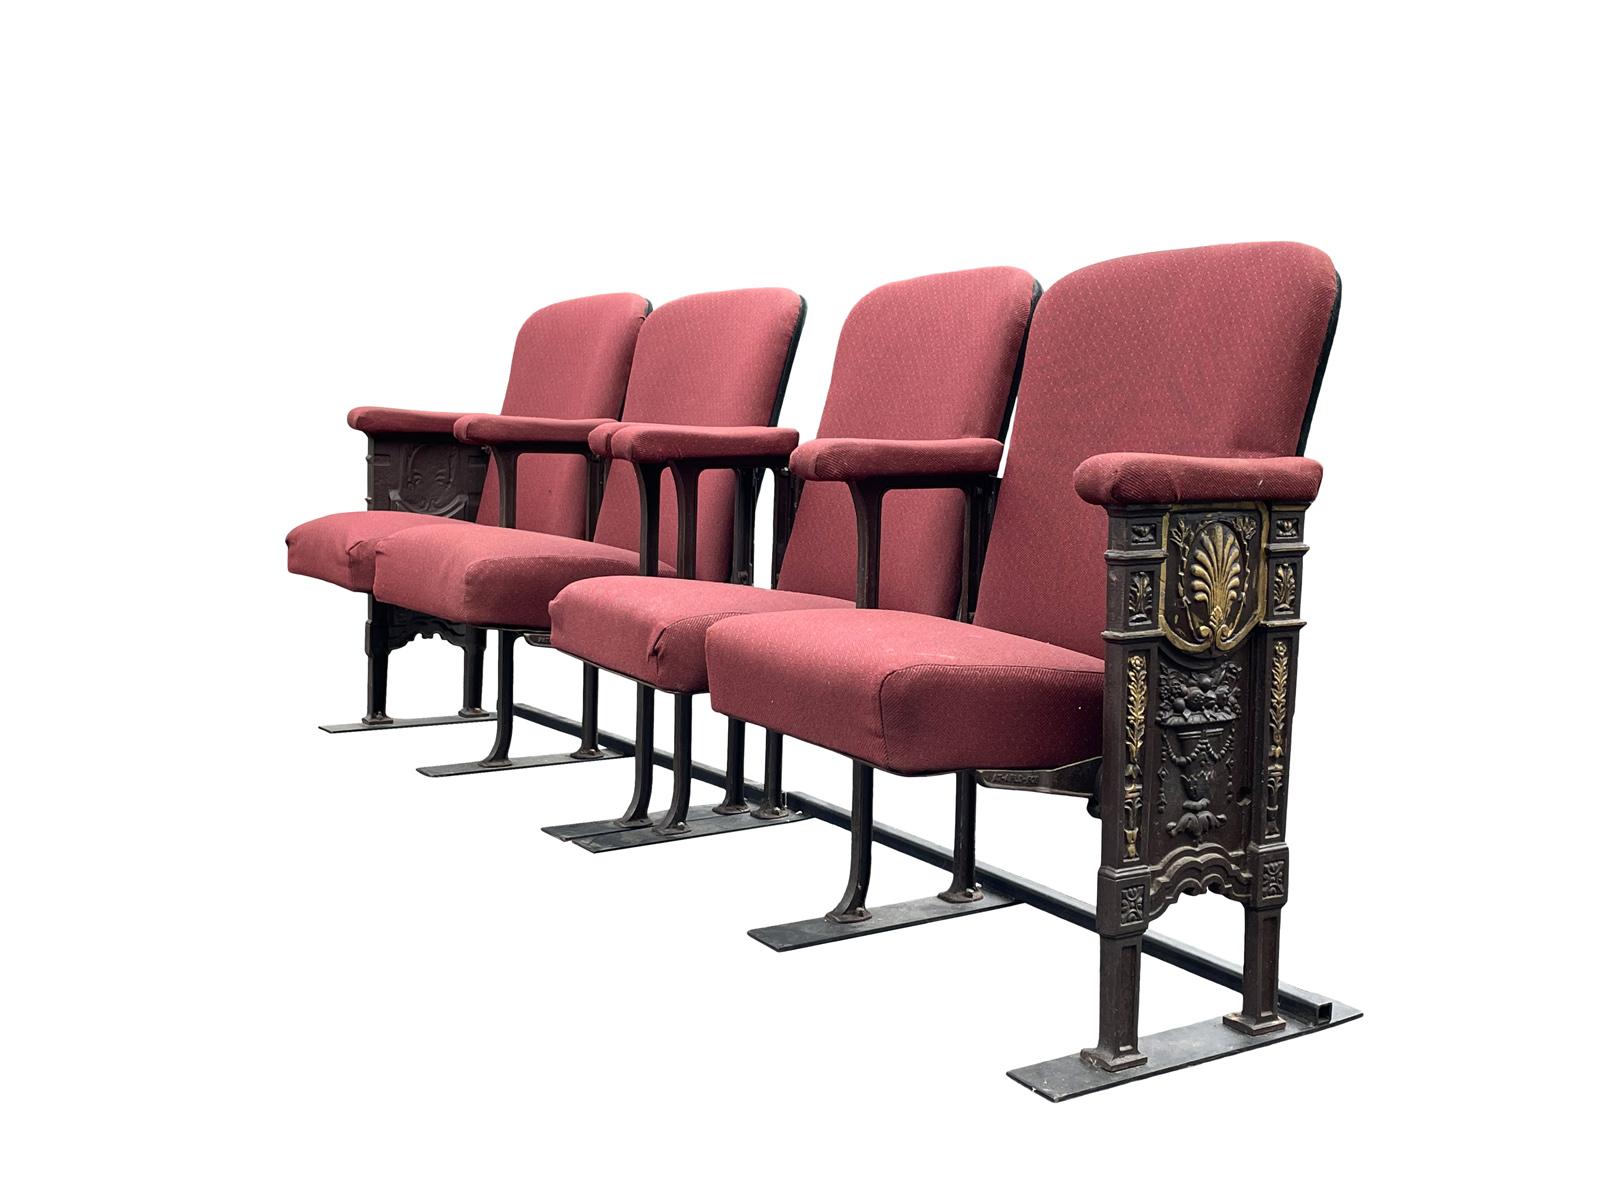 American Original Studio54 Newyork Art Deco Theater Seat Bench Chairs For Sale